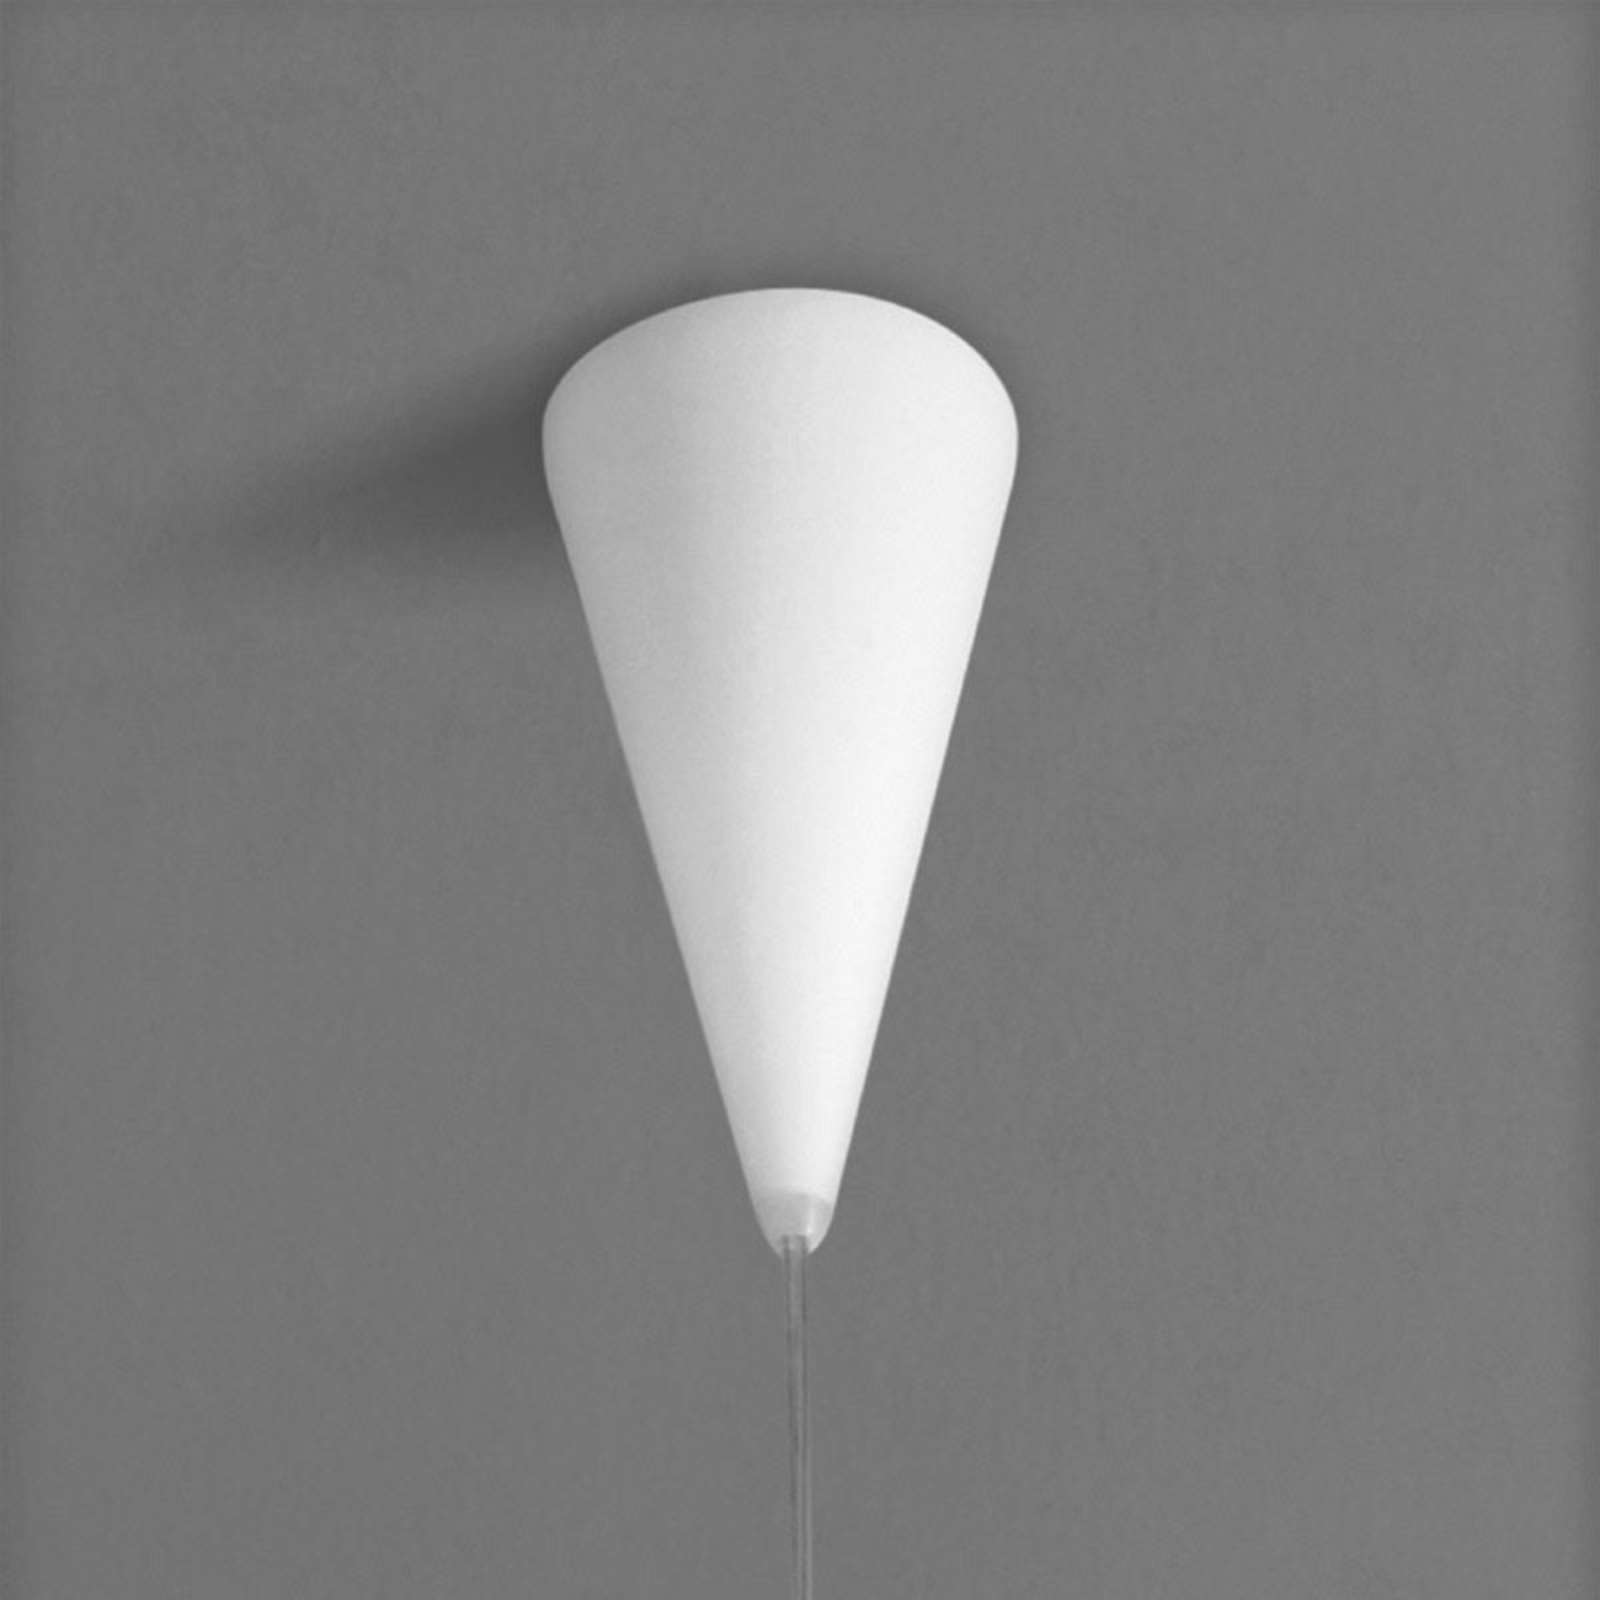 Rotaliana Goccia 63 - drop-shaped pendant light